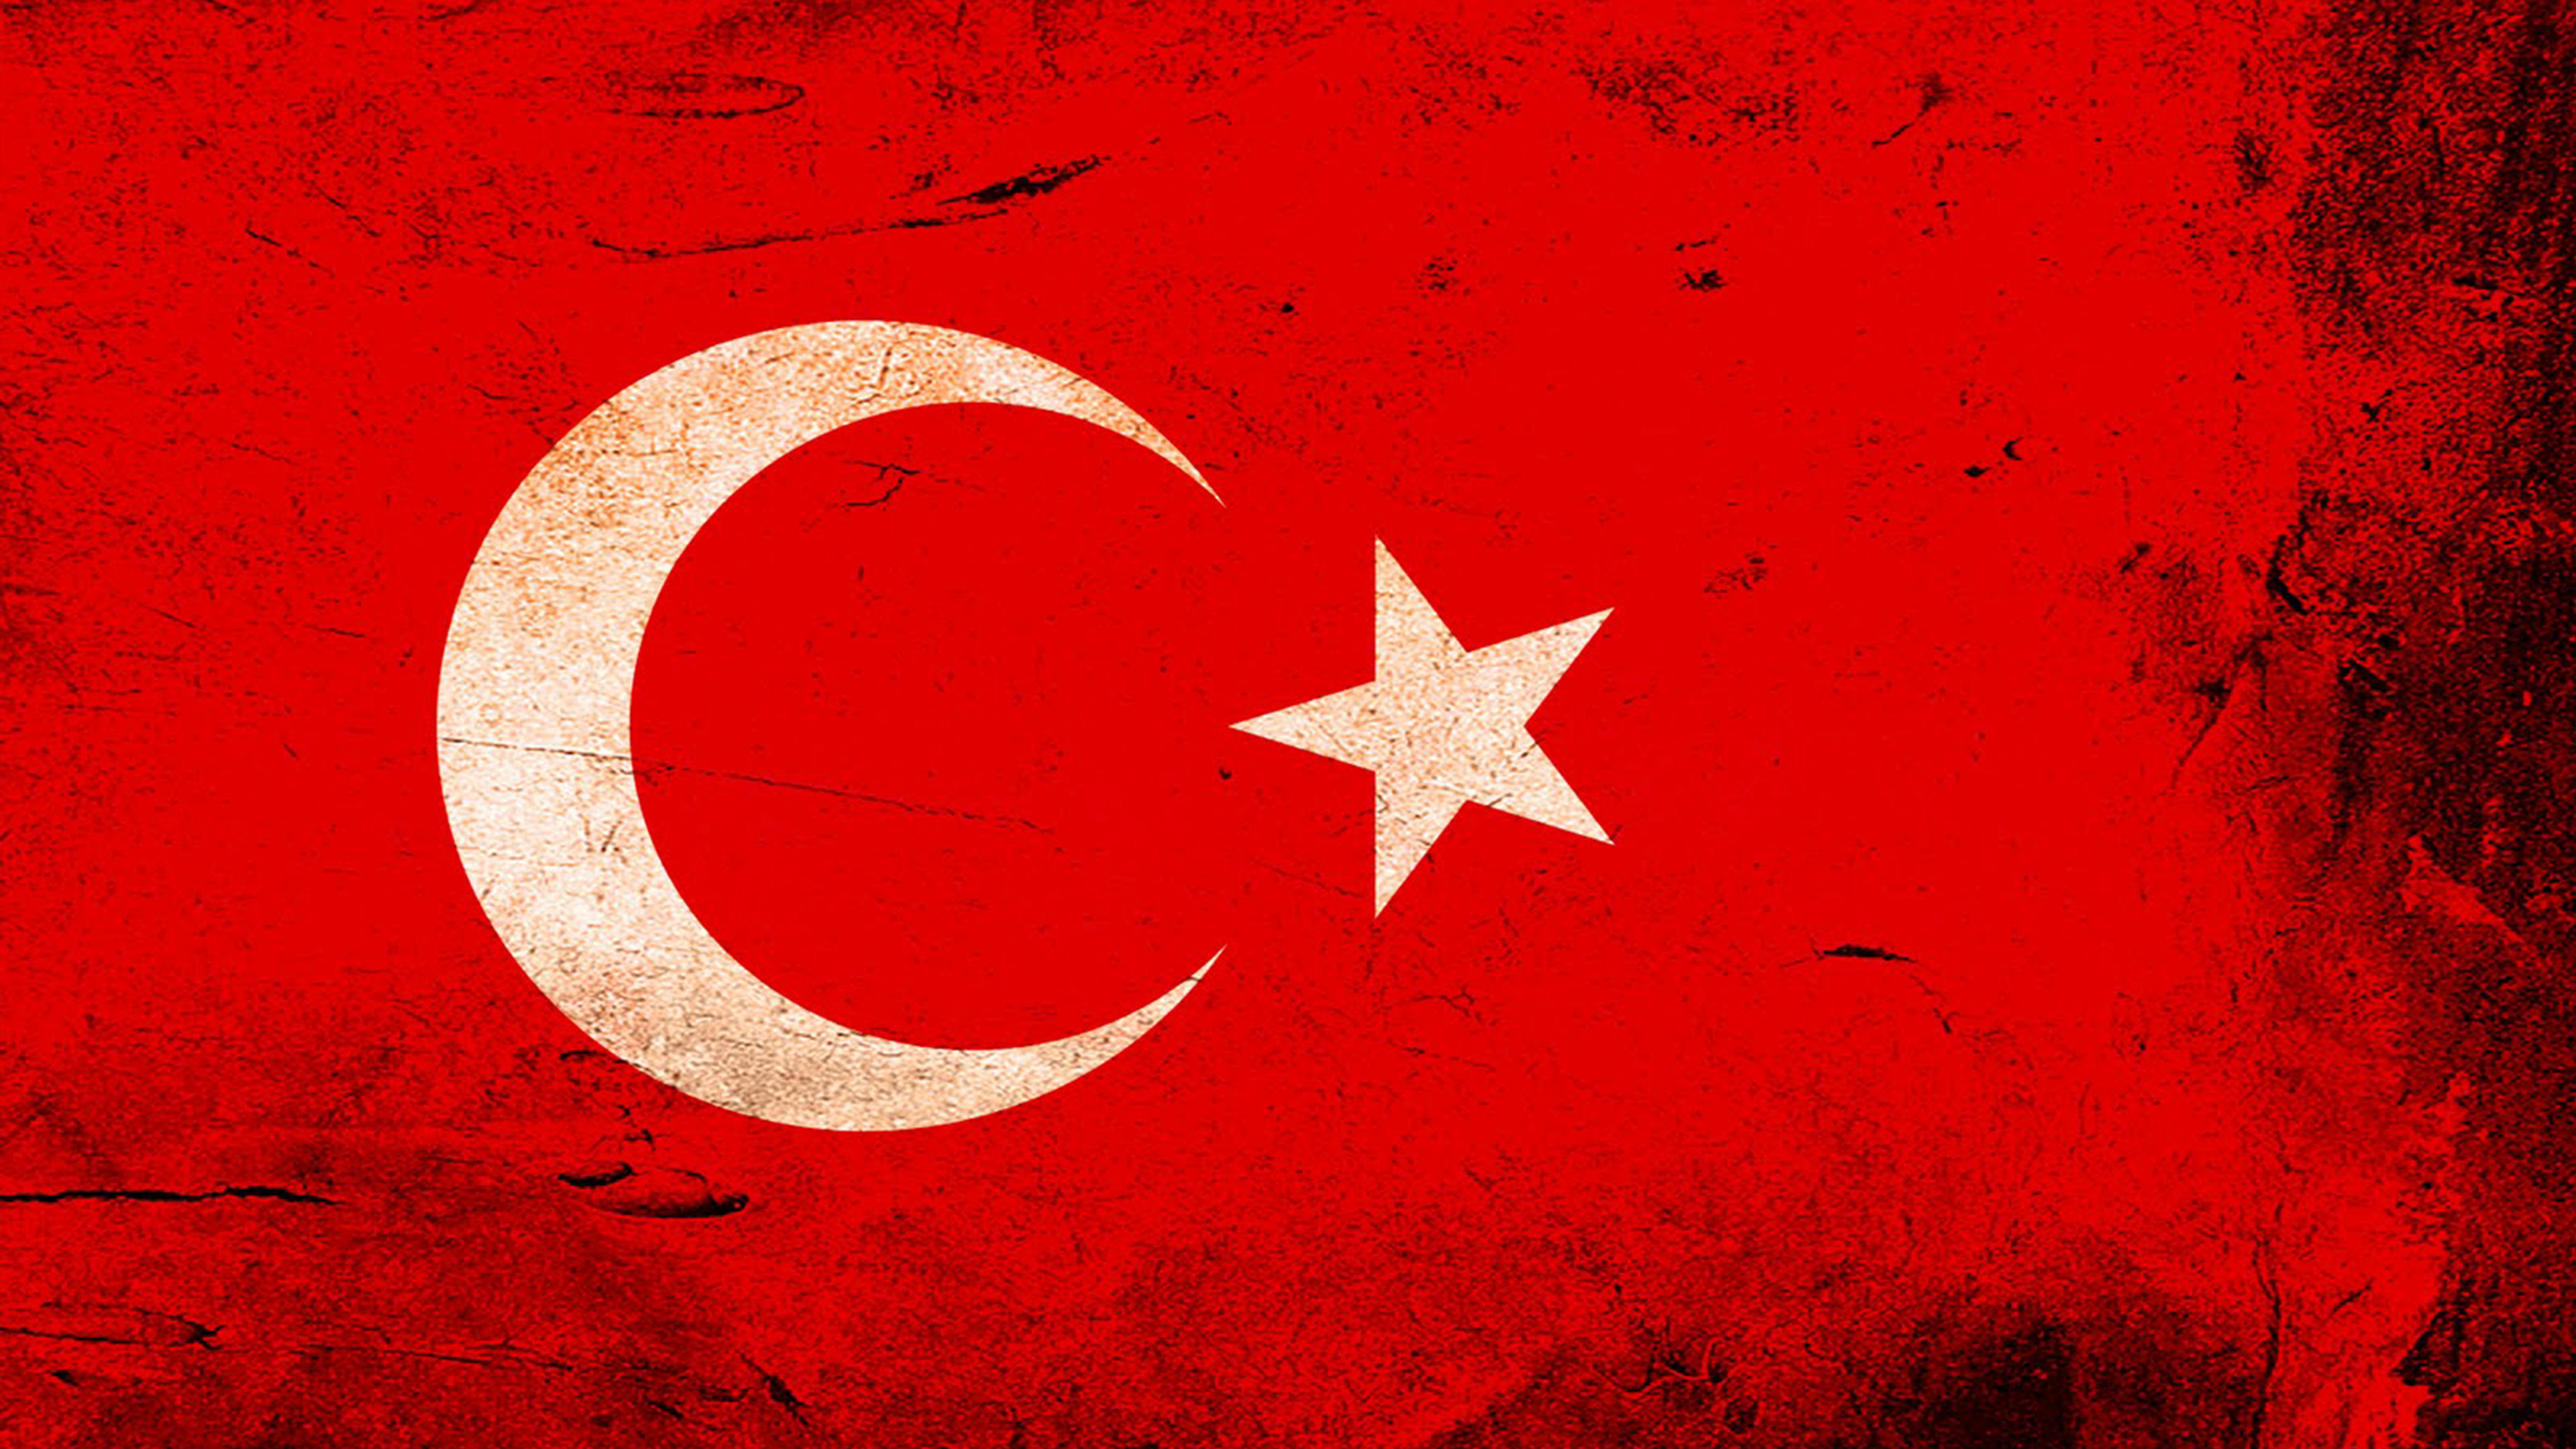 4k ultrahd turk bayraklari resimleri 14